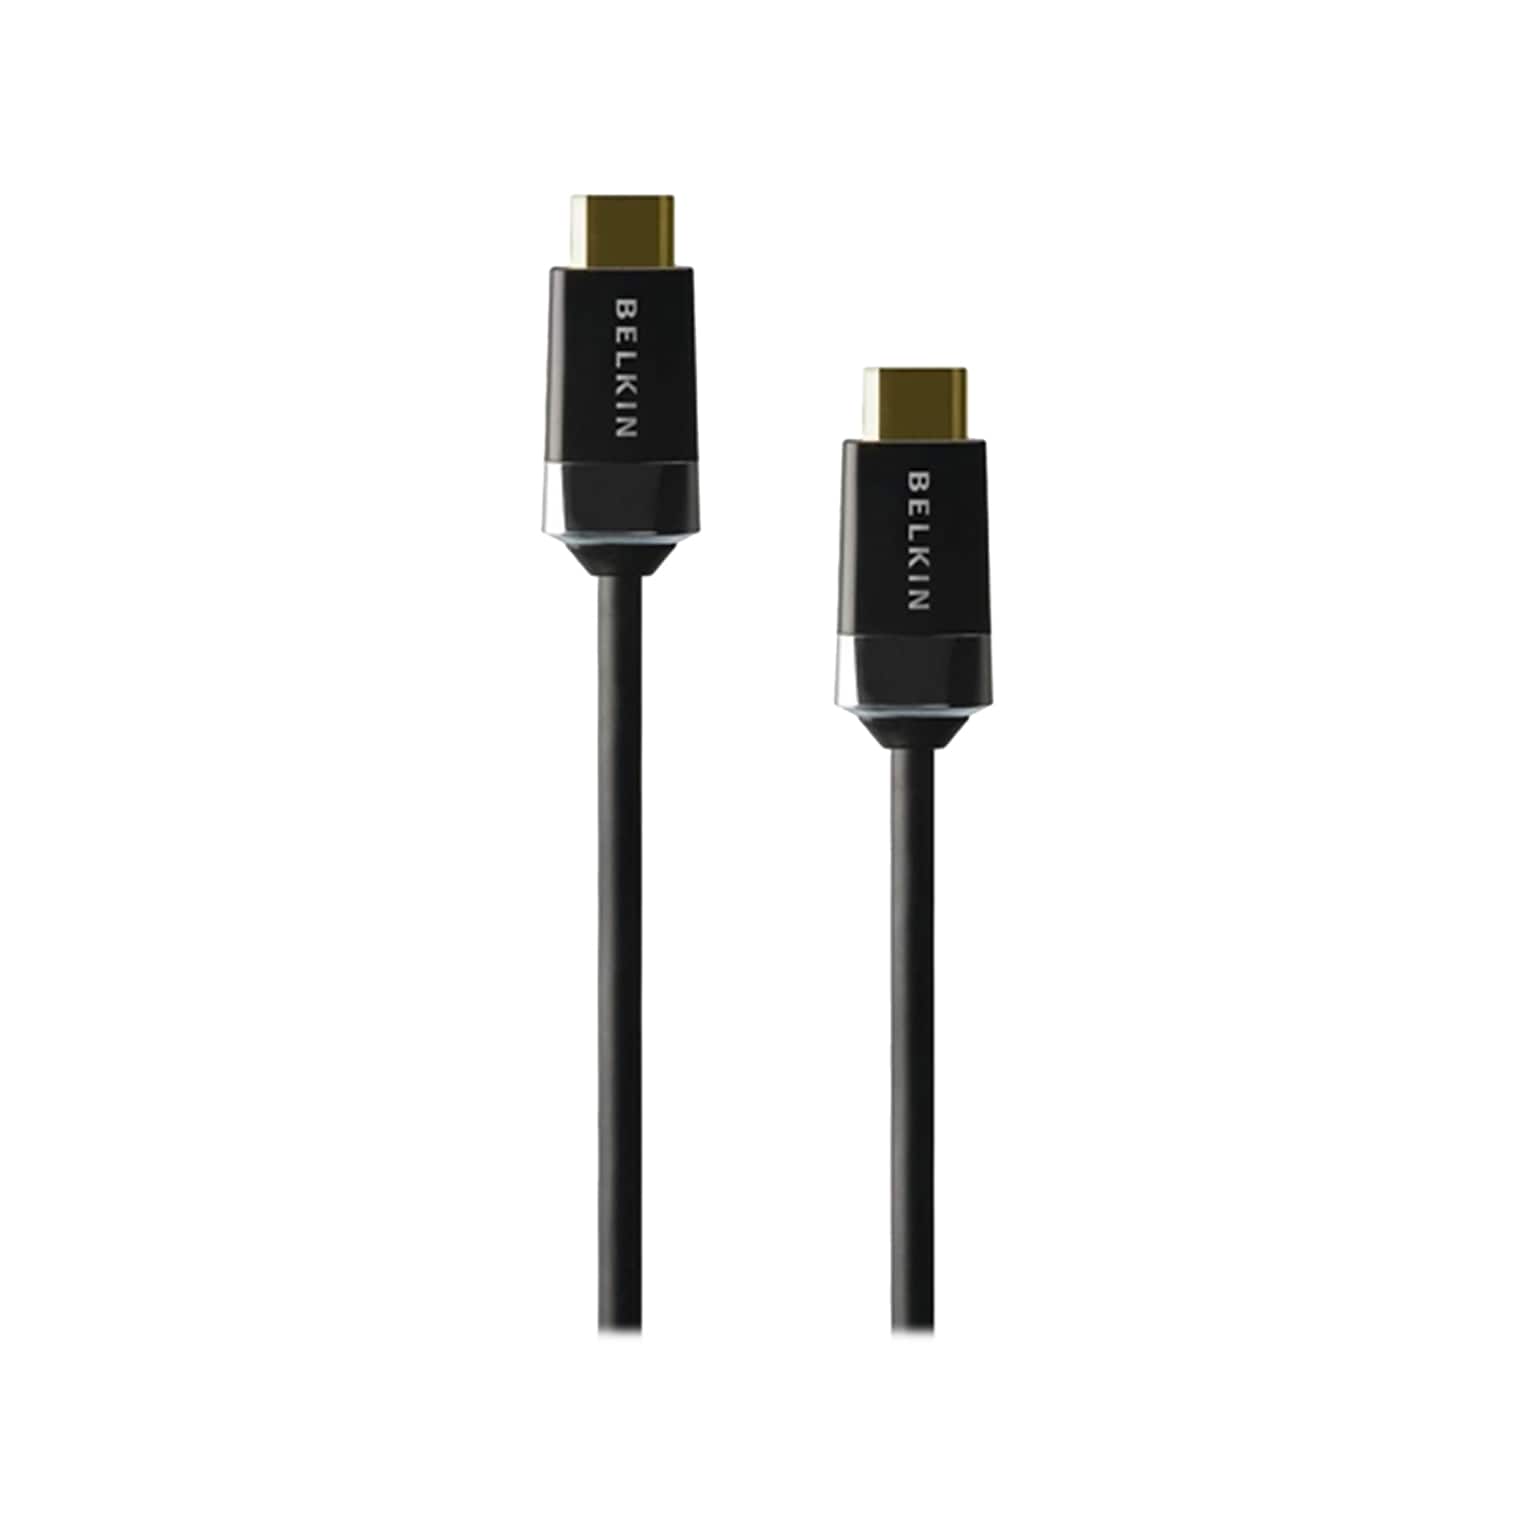 Belkin AV10050BT1M 3.28 HDMI 4K Audio/Video Cable, Black